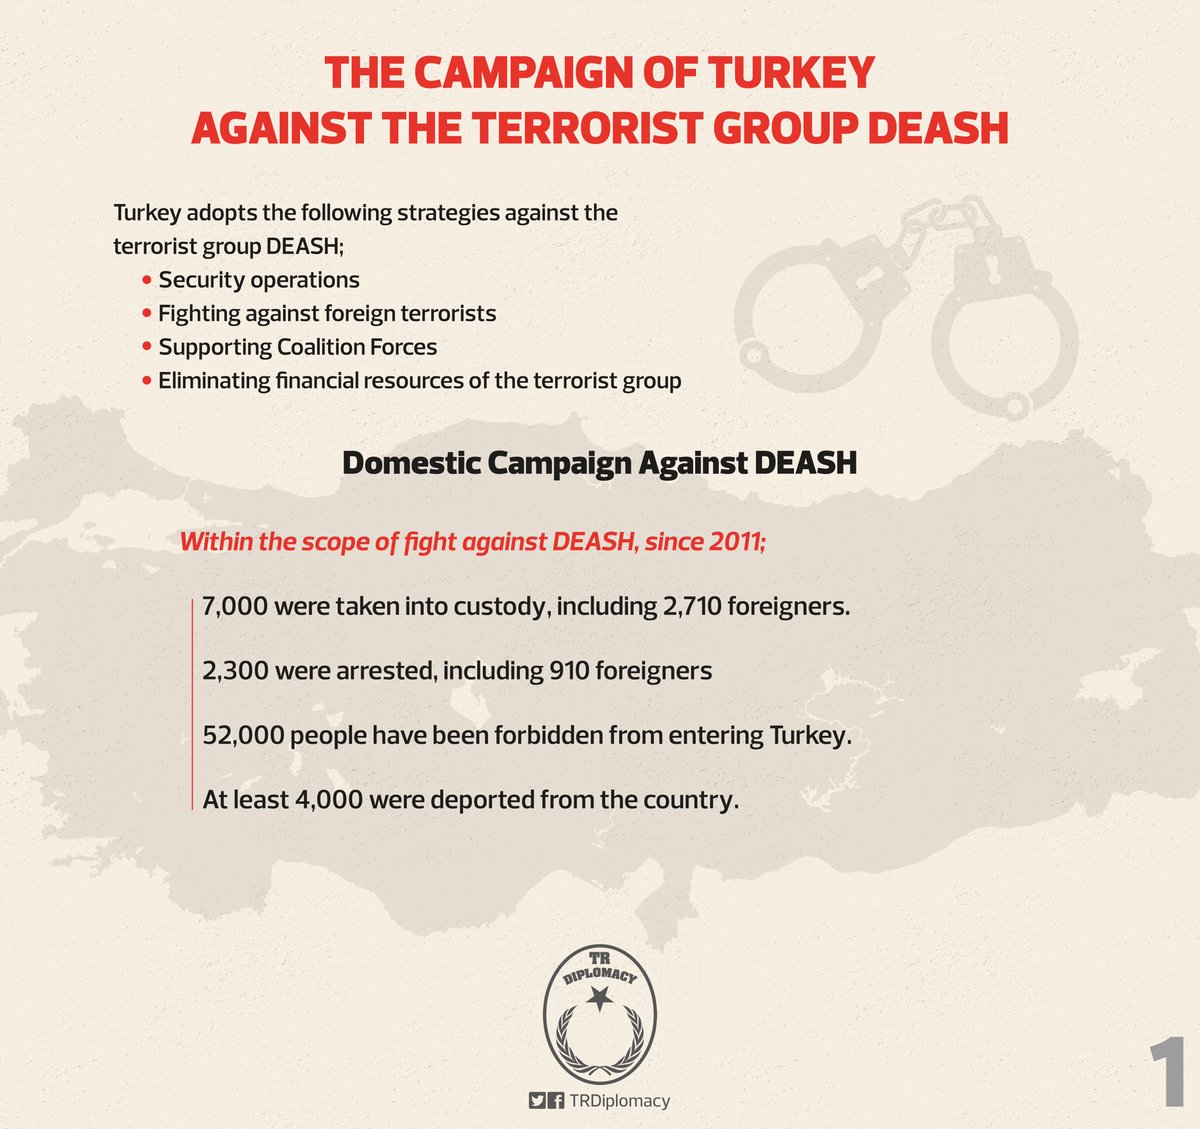 Turkey's campaign against the terrorist organization DEASH